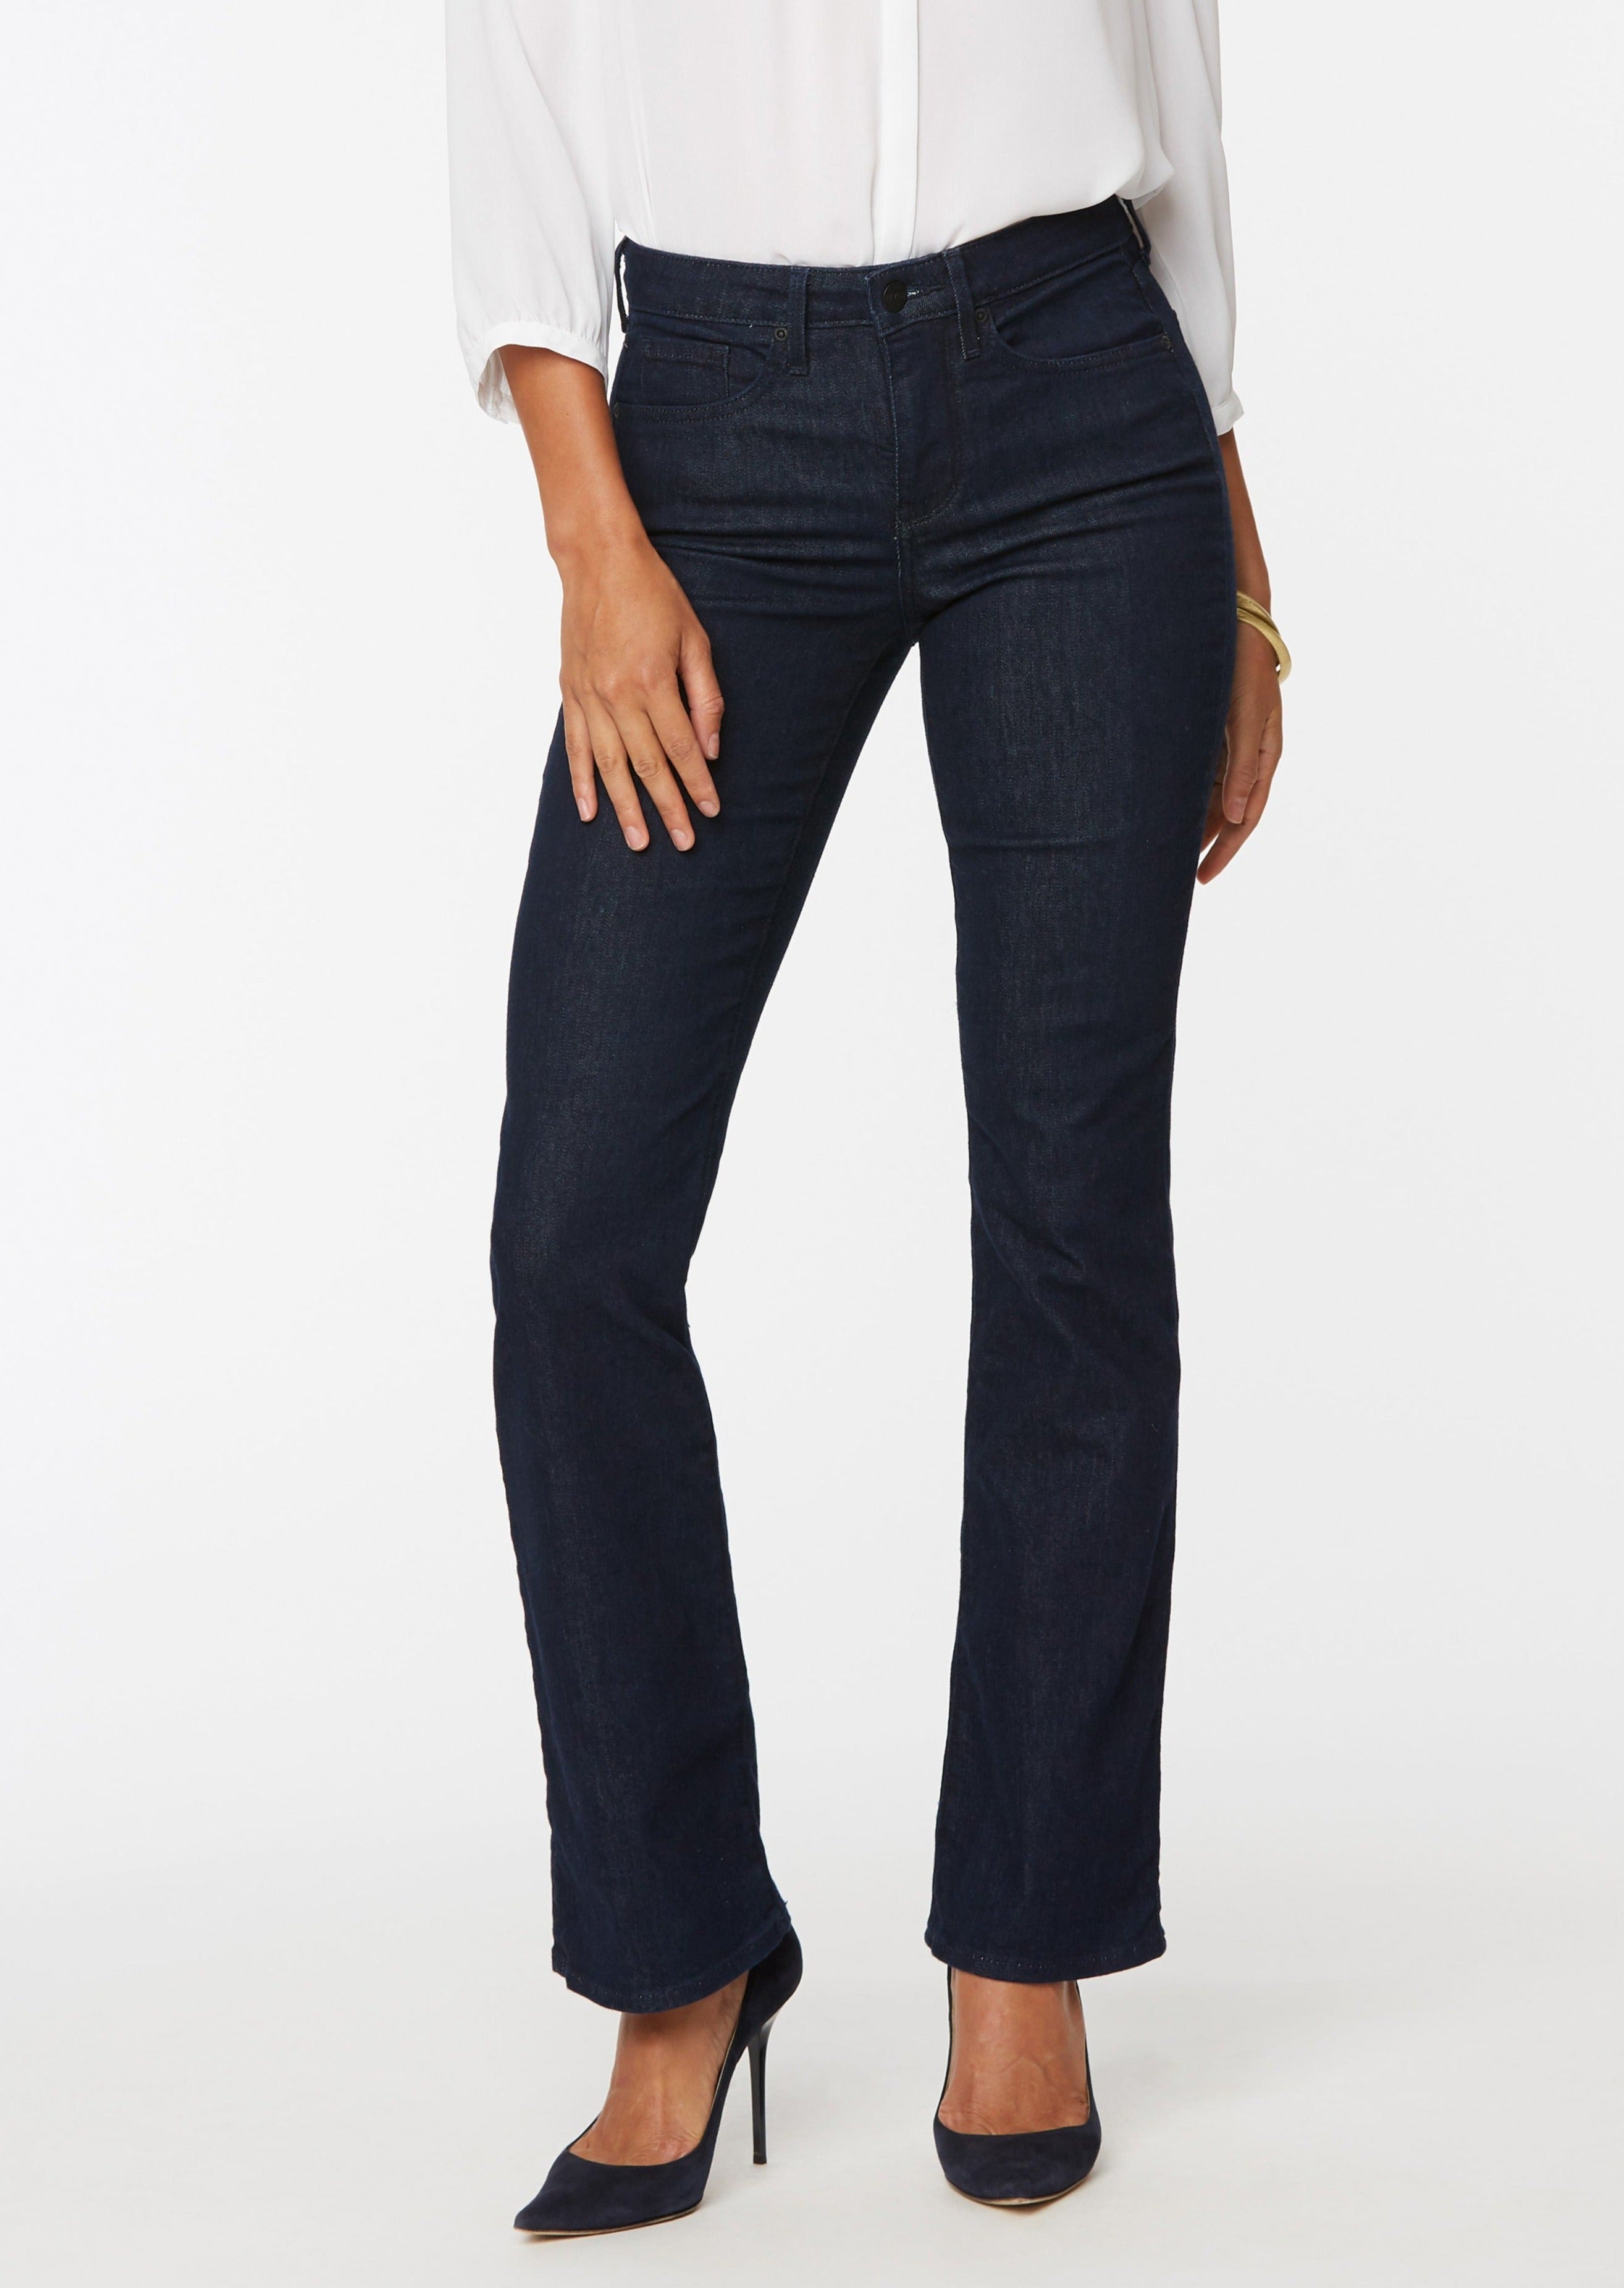 NYDJ Womens Barbara Boot-Cut Jeans, Rinse, 12 US at  Women's